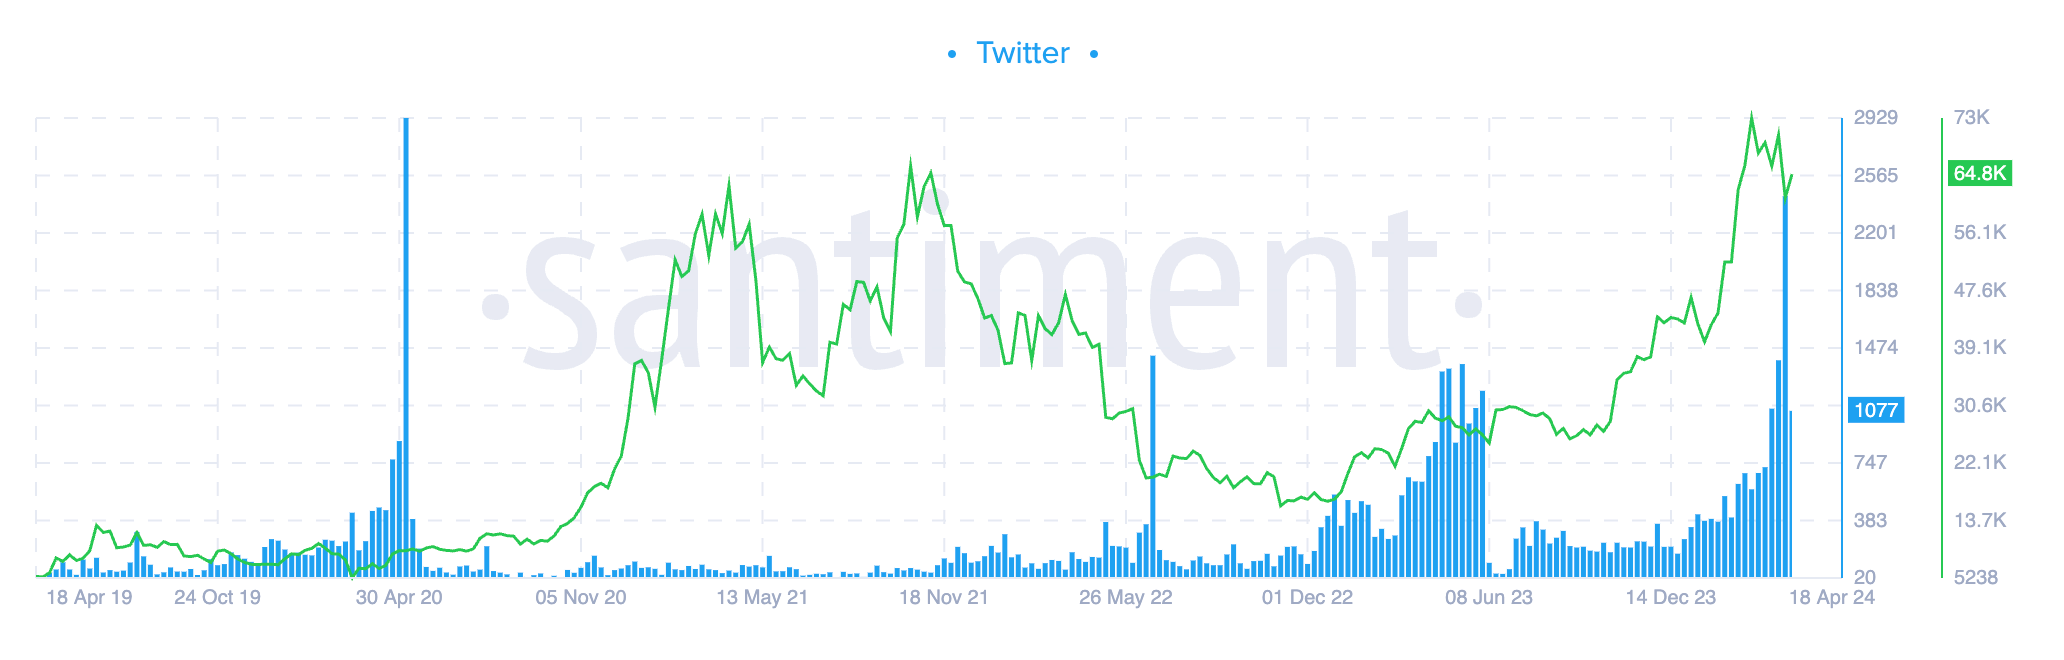 Bitcoin halving Twitter involvement  (Santiment)